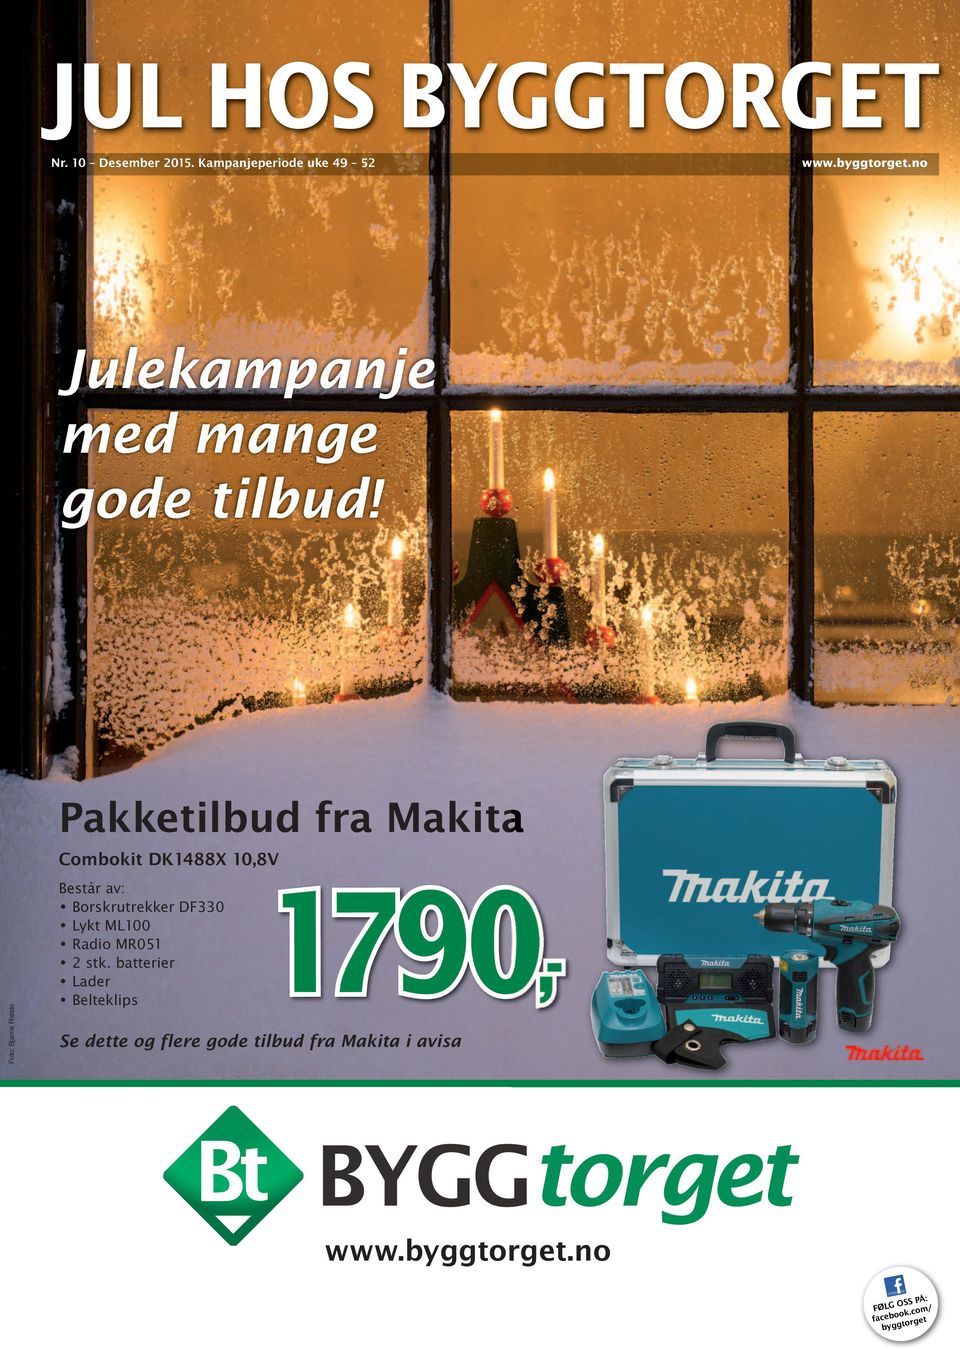 Pakketilbud fra Makita 790,1790 1 Foto: Bjarne Riesto Combokit DK1488X 10,8V Består av: